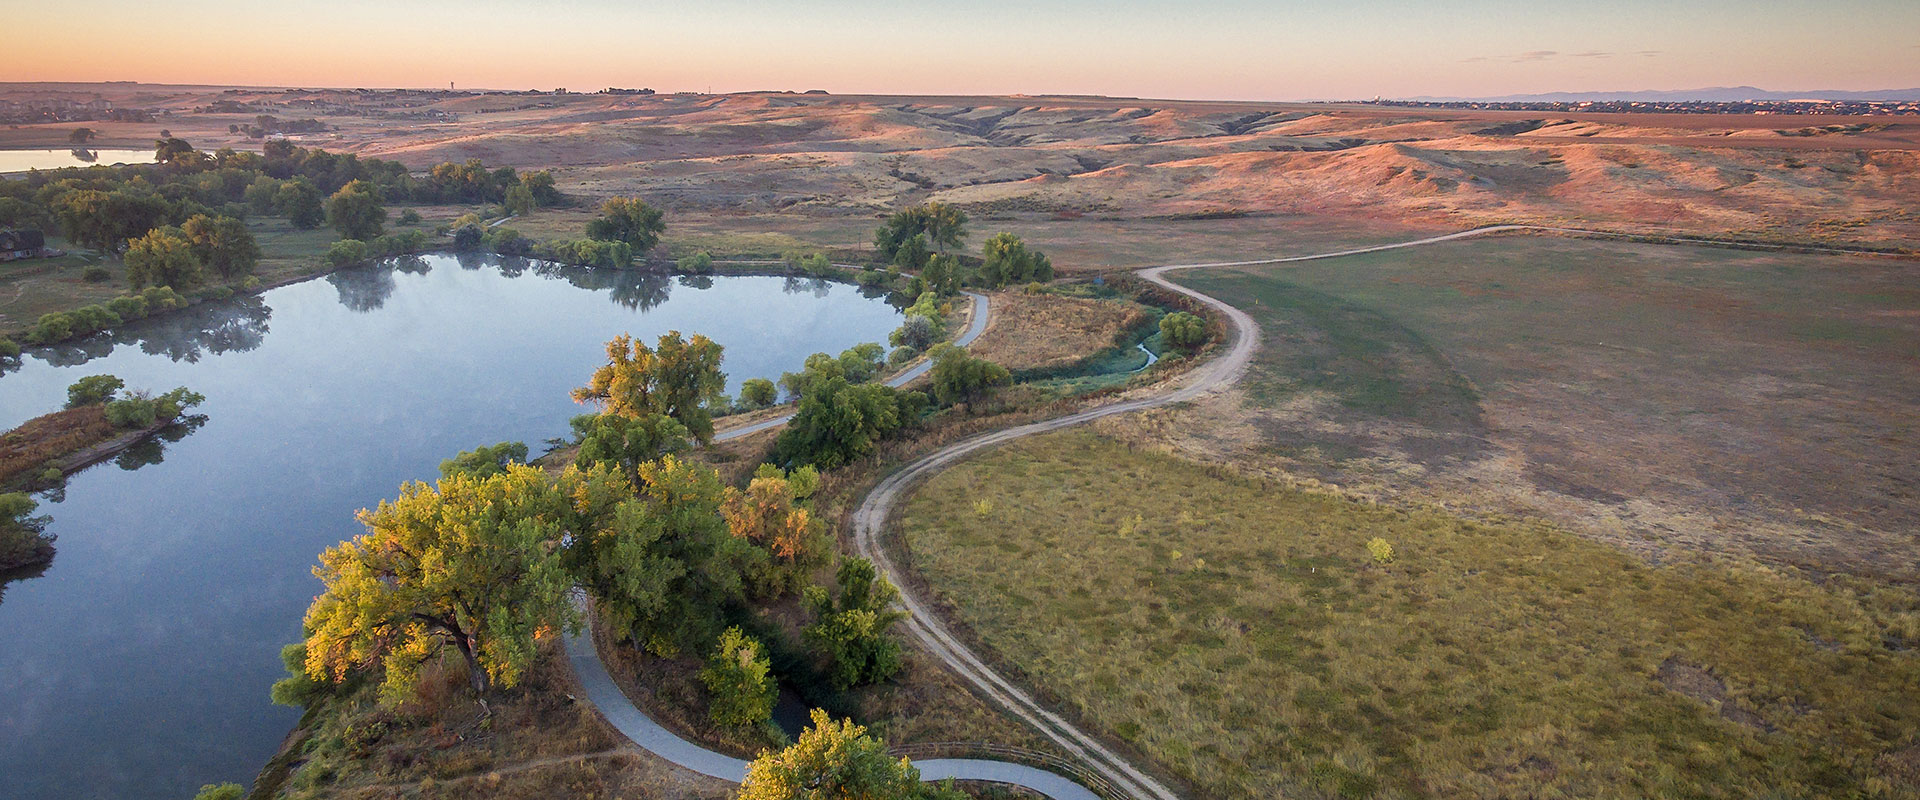 Aerial shot of large open ranch landscape